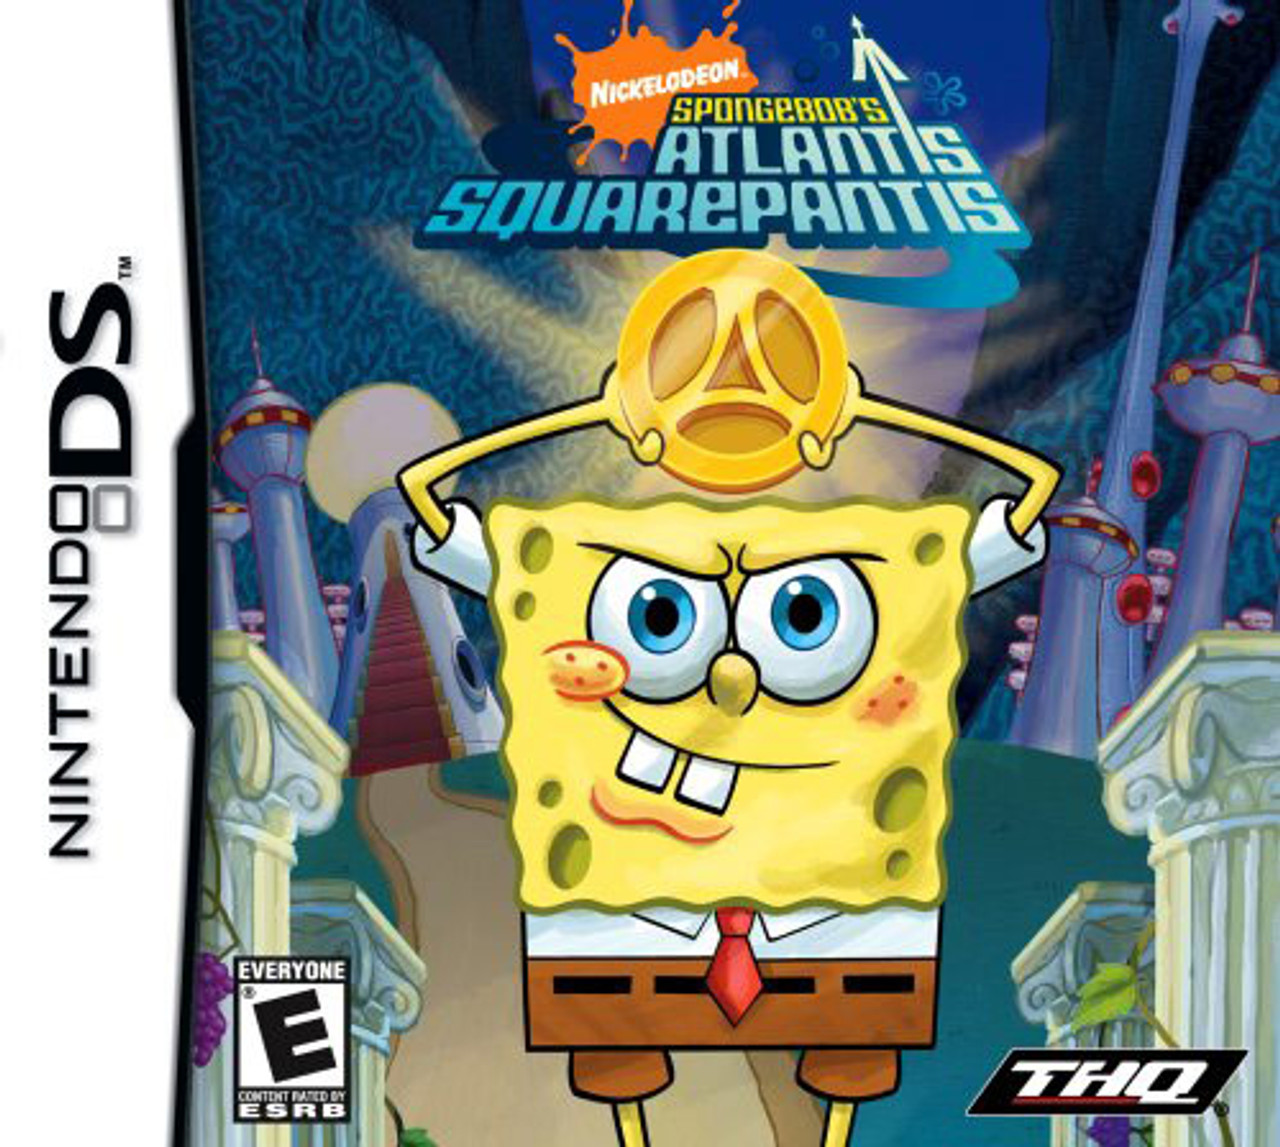 spongebob-atlantis-squarepantis-nintendo-ds-game-for-sale-dkoldies